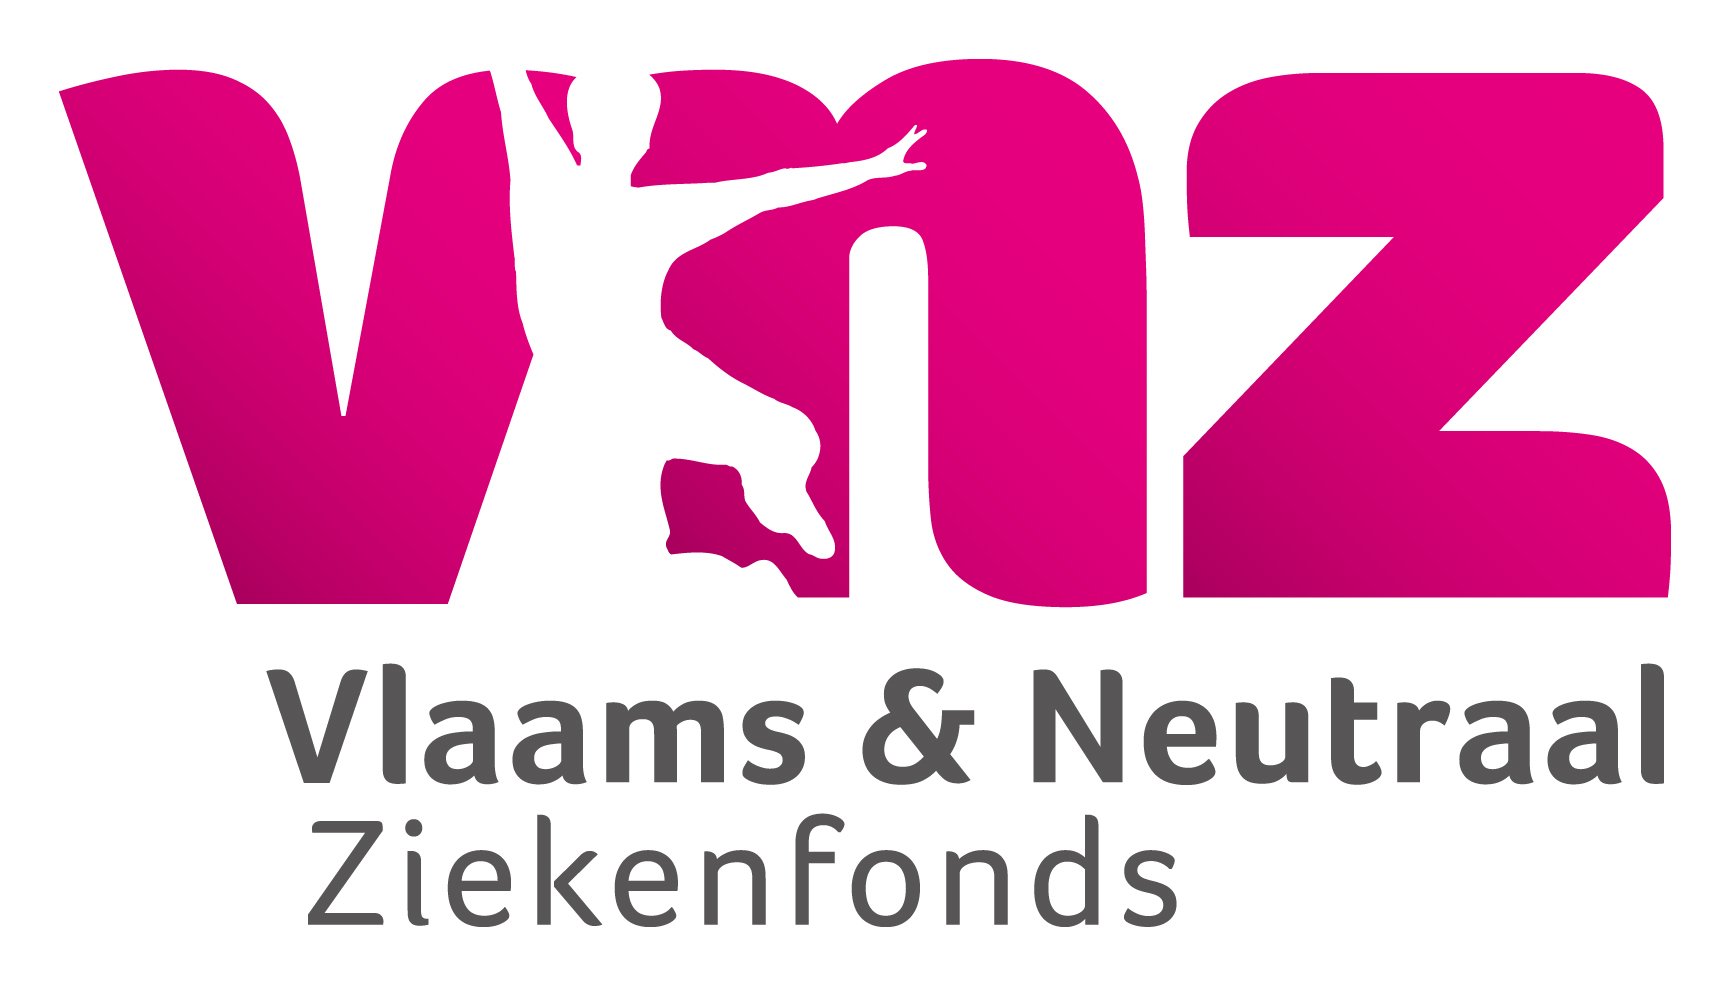 Vlaams & Neutraal Ziekenfonds logo